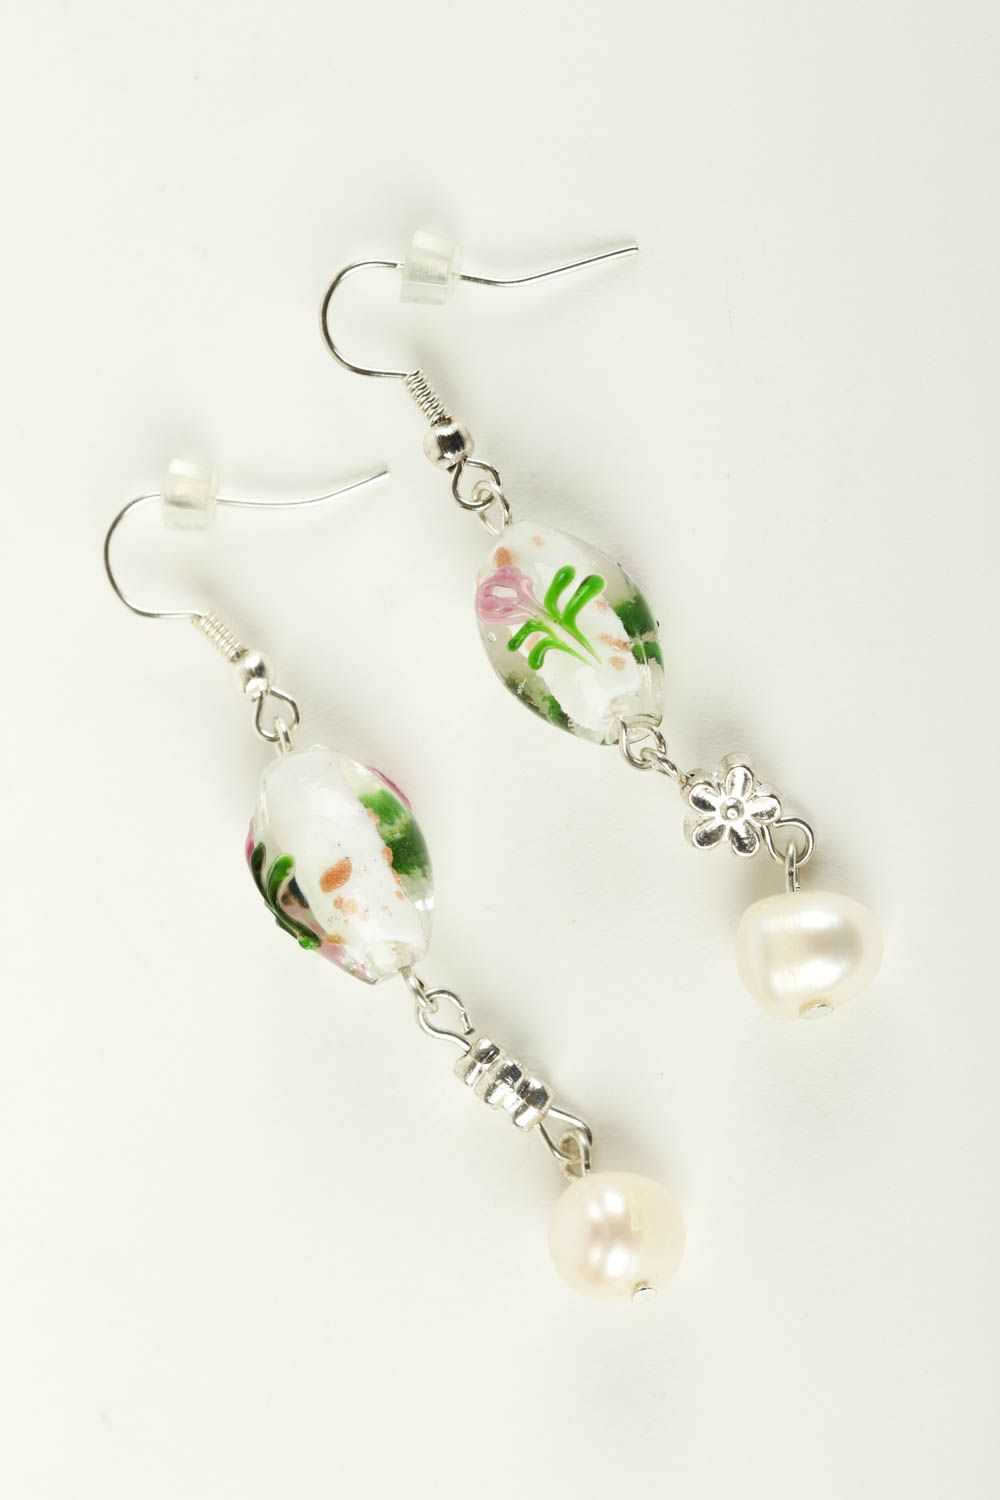 Glass jewelry glass earrings handmade glass accessories stylish jewelry for her photo 2